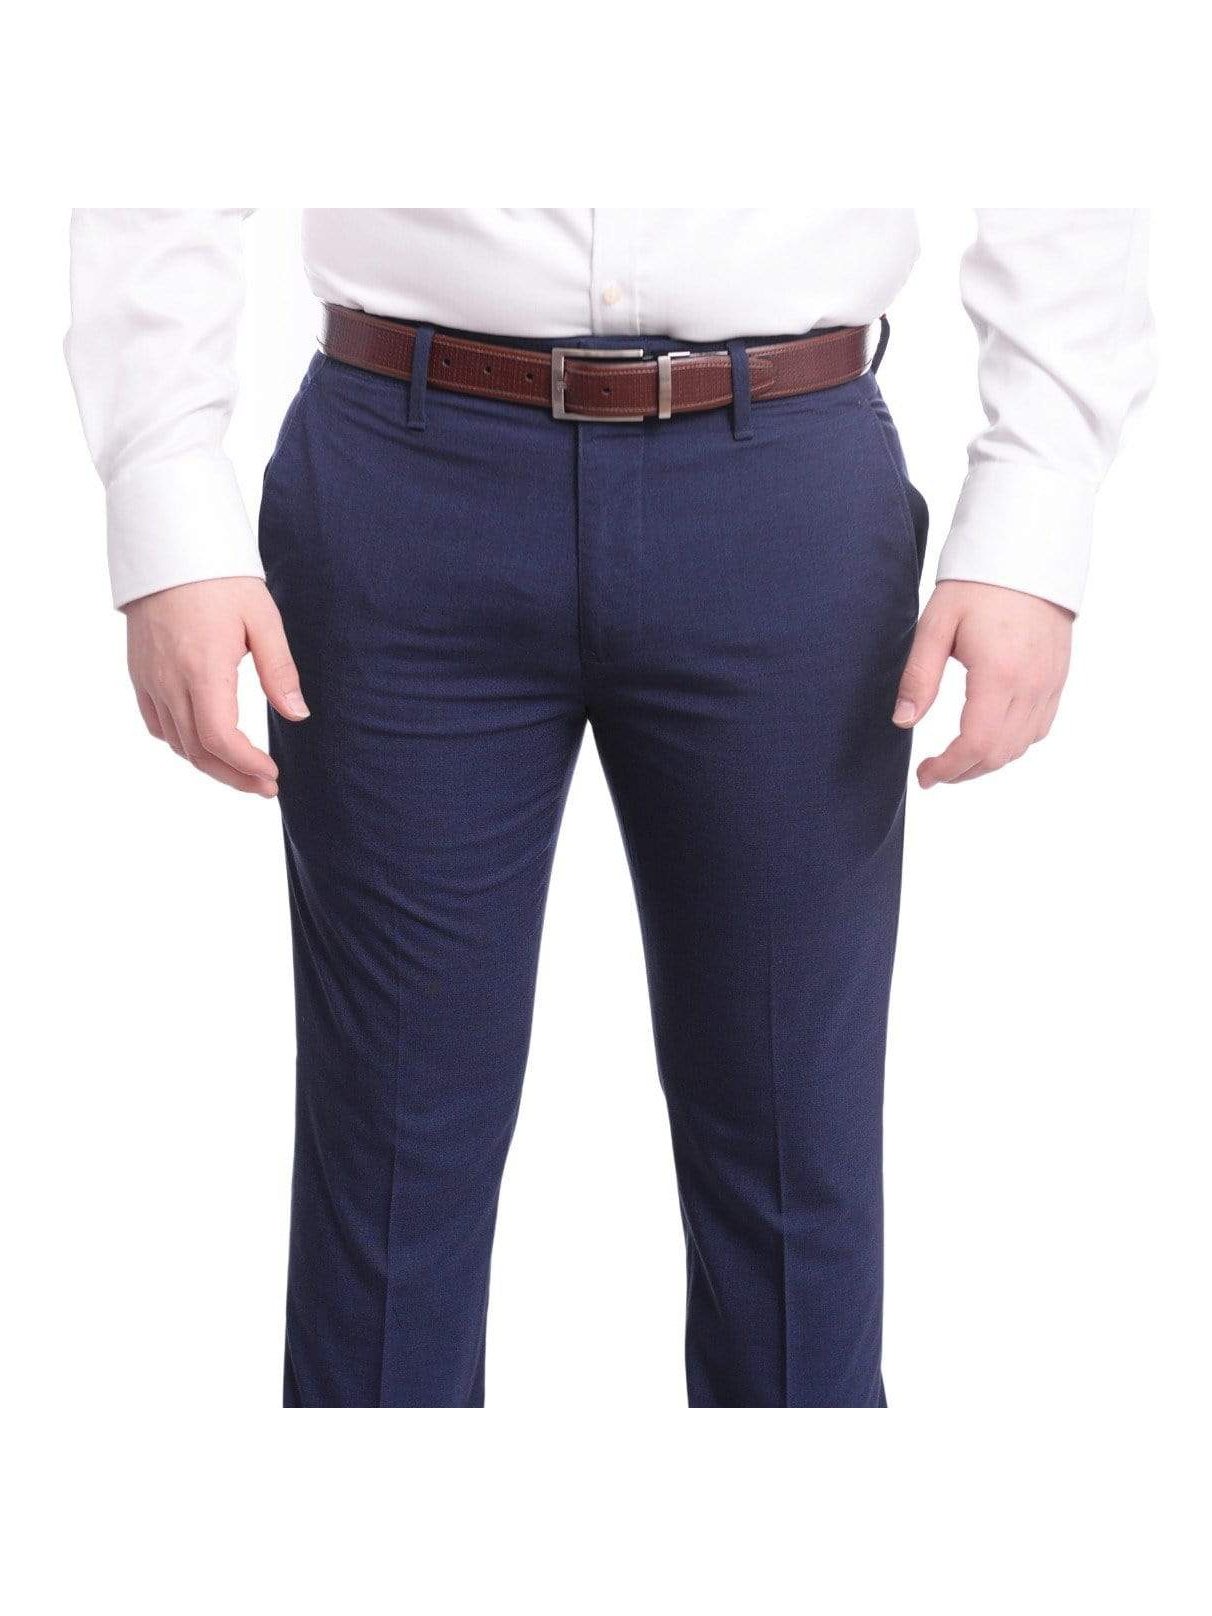 Mens Solid Black Slim Fit Flat Front 4 Way Stretch Dress Pants | The Suit  Depot